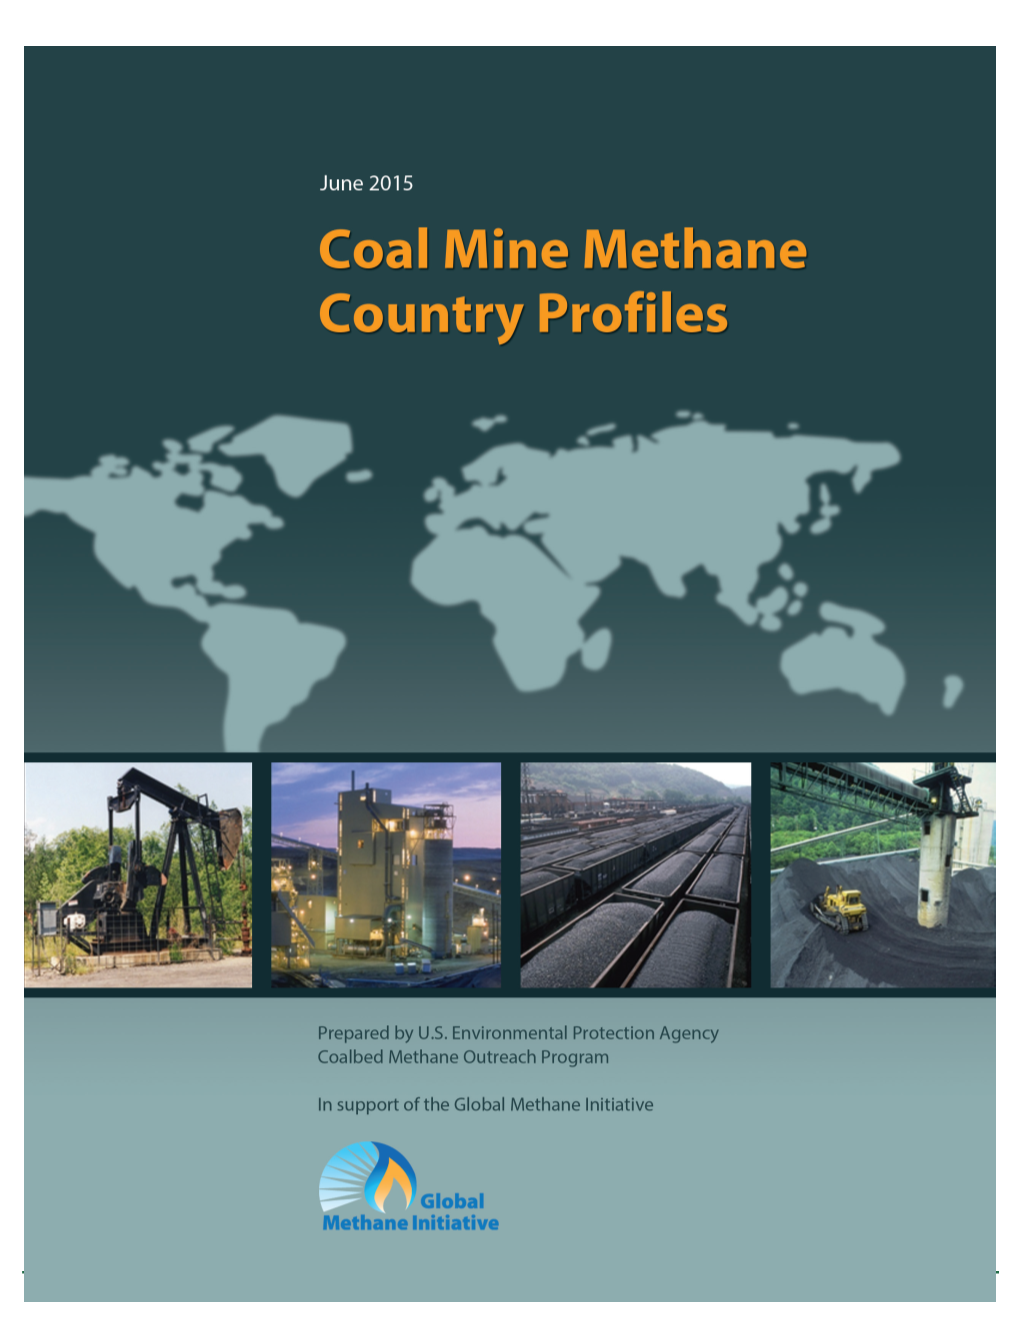 Coal Mine Methane Country Profiles, June 2015